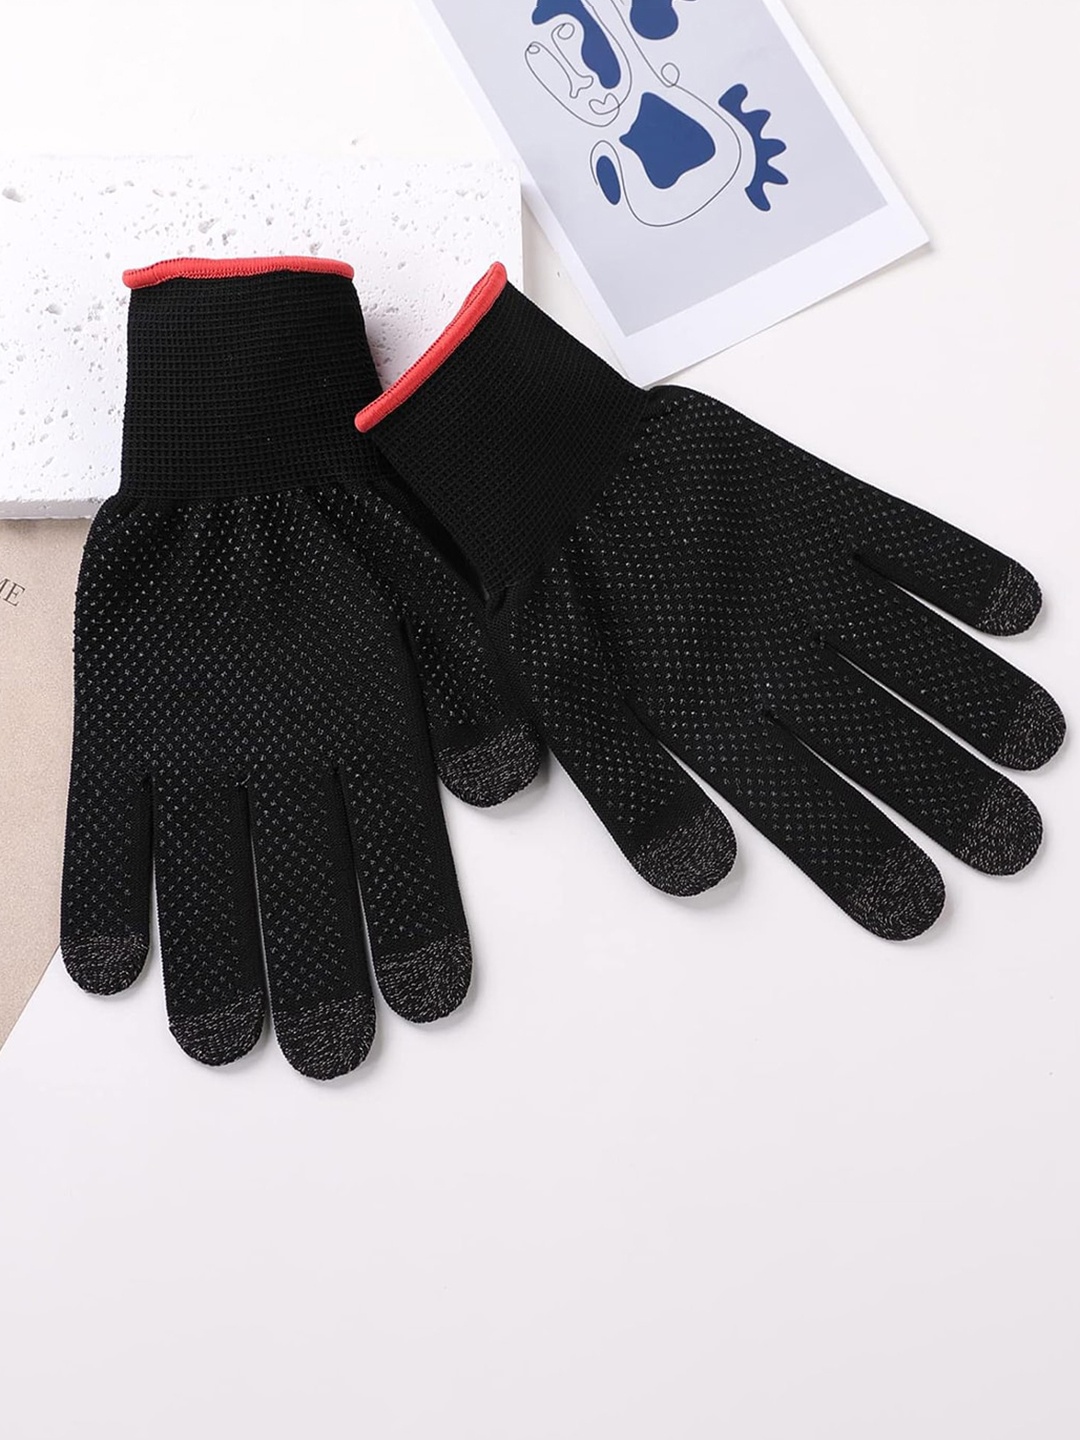 

Kuber Industries Unisex Patterned Touchscreen Gloves, Black